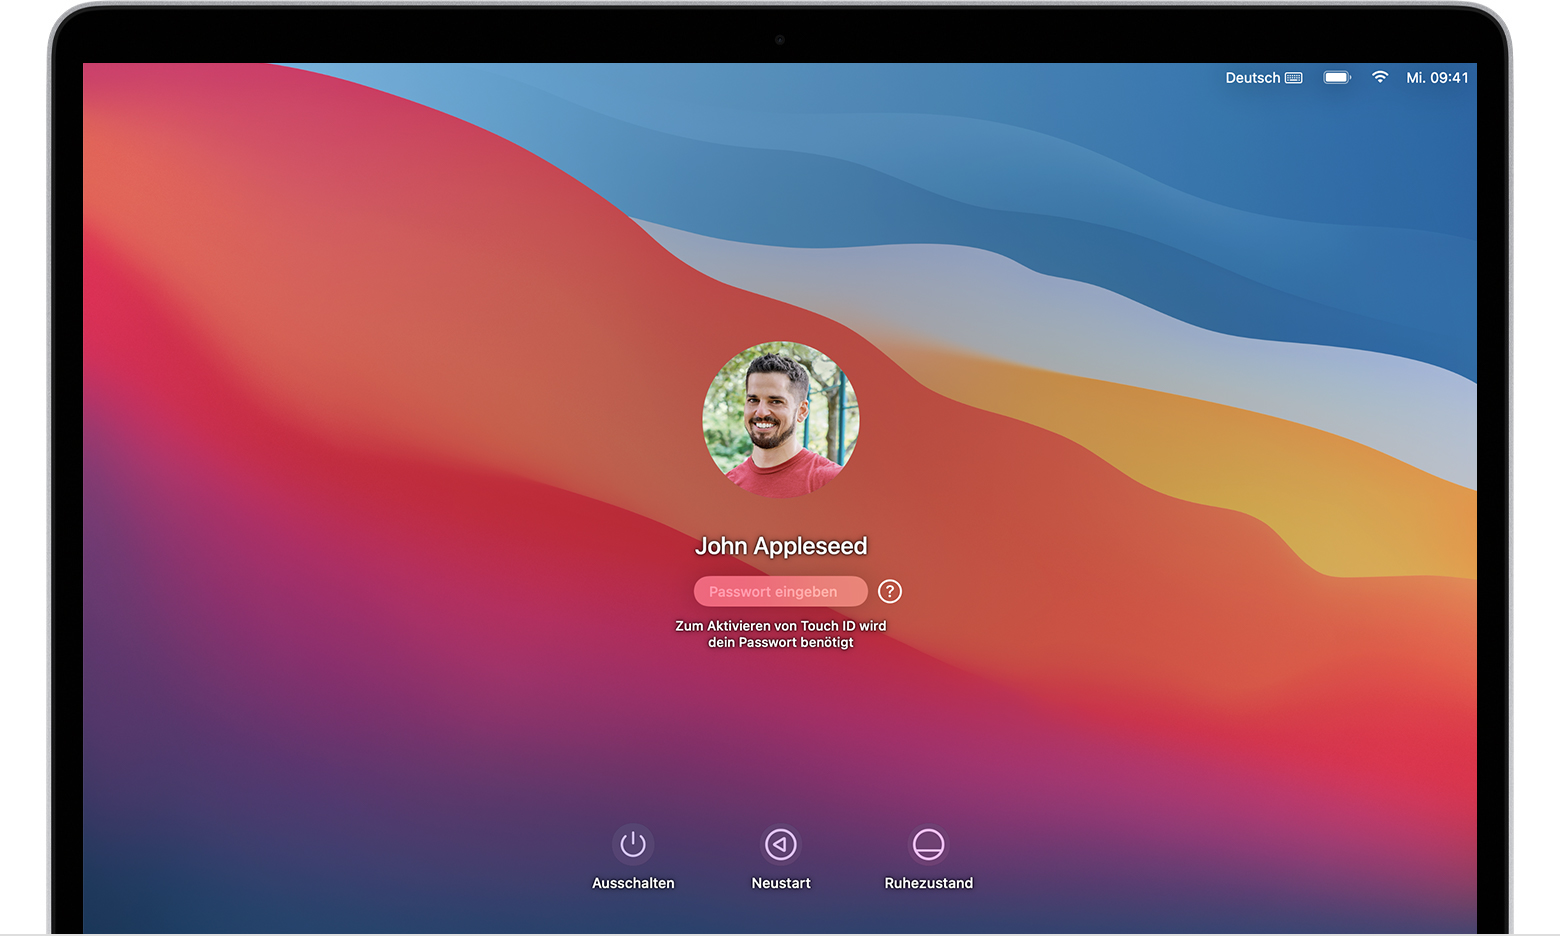 Benutzeranmeldebildschirm in macOS Big Sur